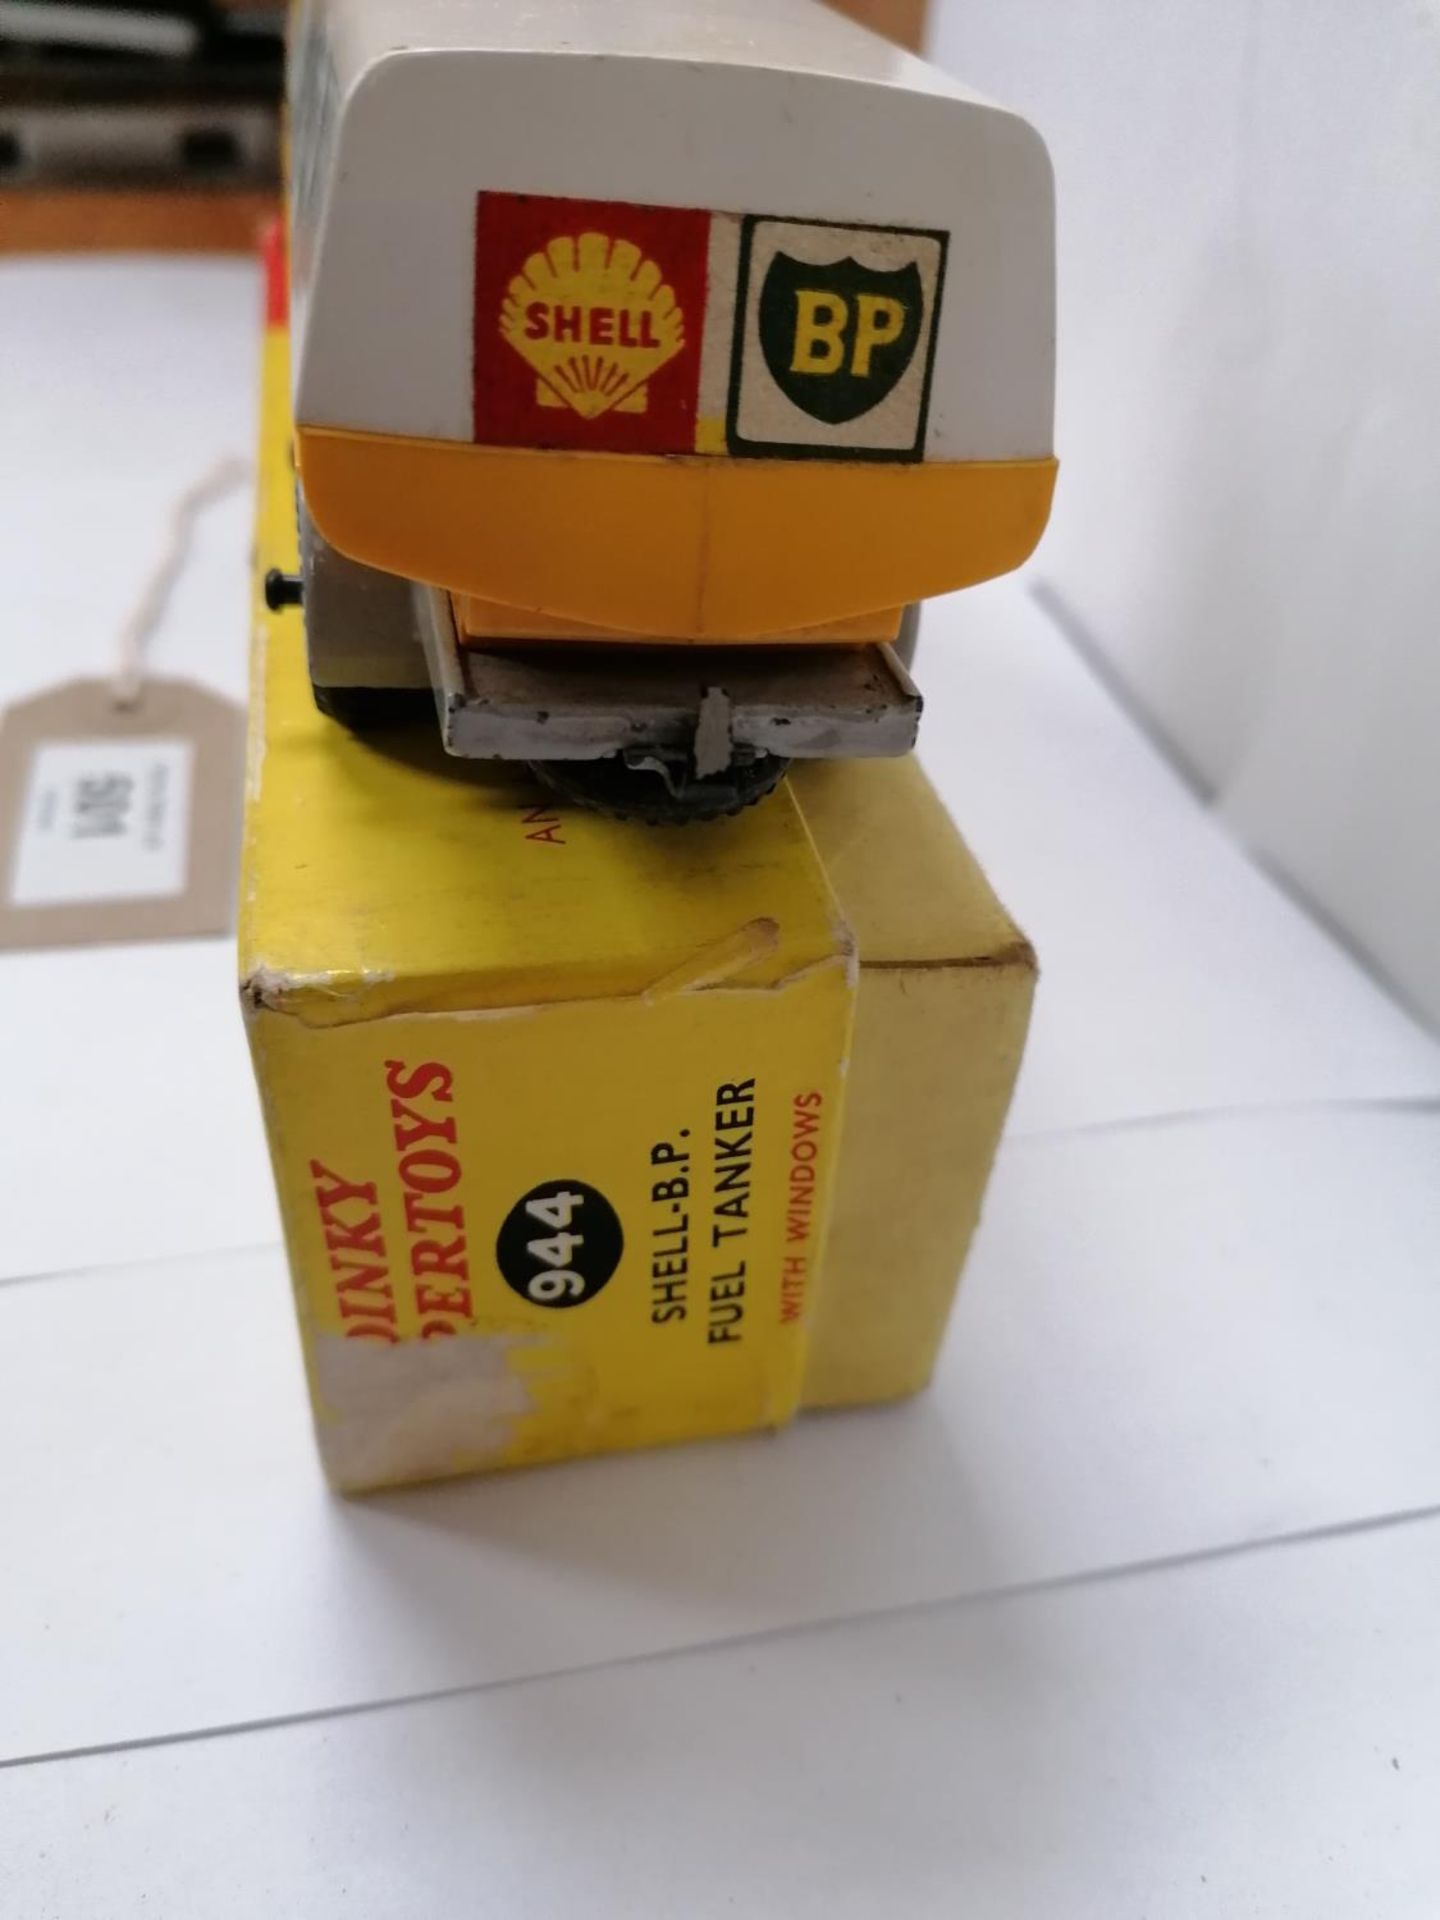 A DINKY SUPERTOYS SHELL BP TANKER IN ORIGINAL BOX - MODEL NUMBER 944 - Image 4 of 5